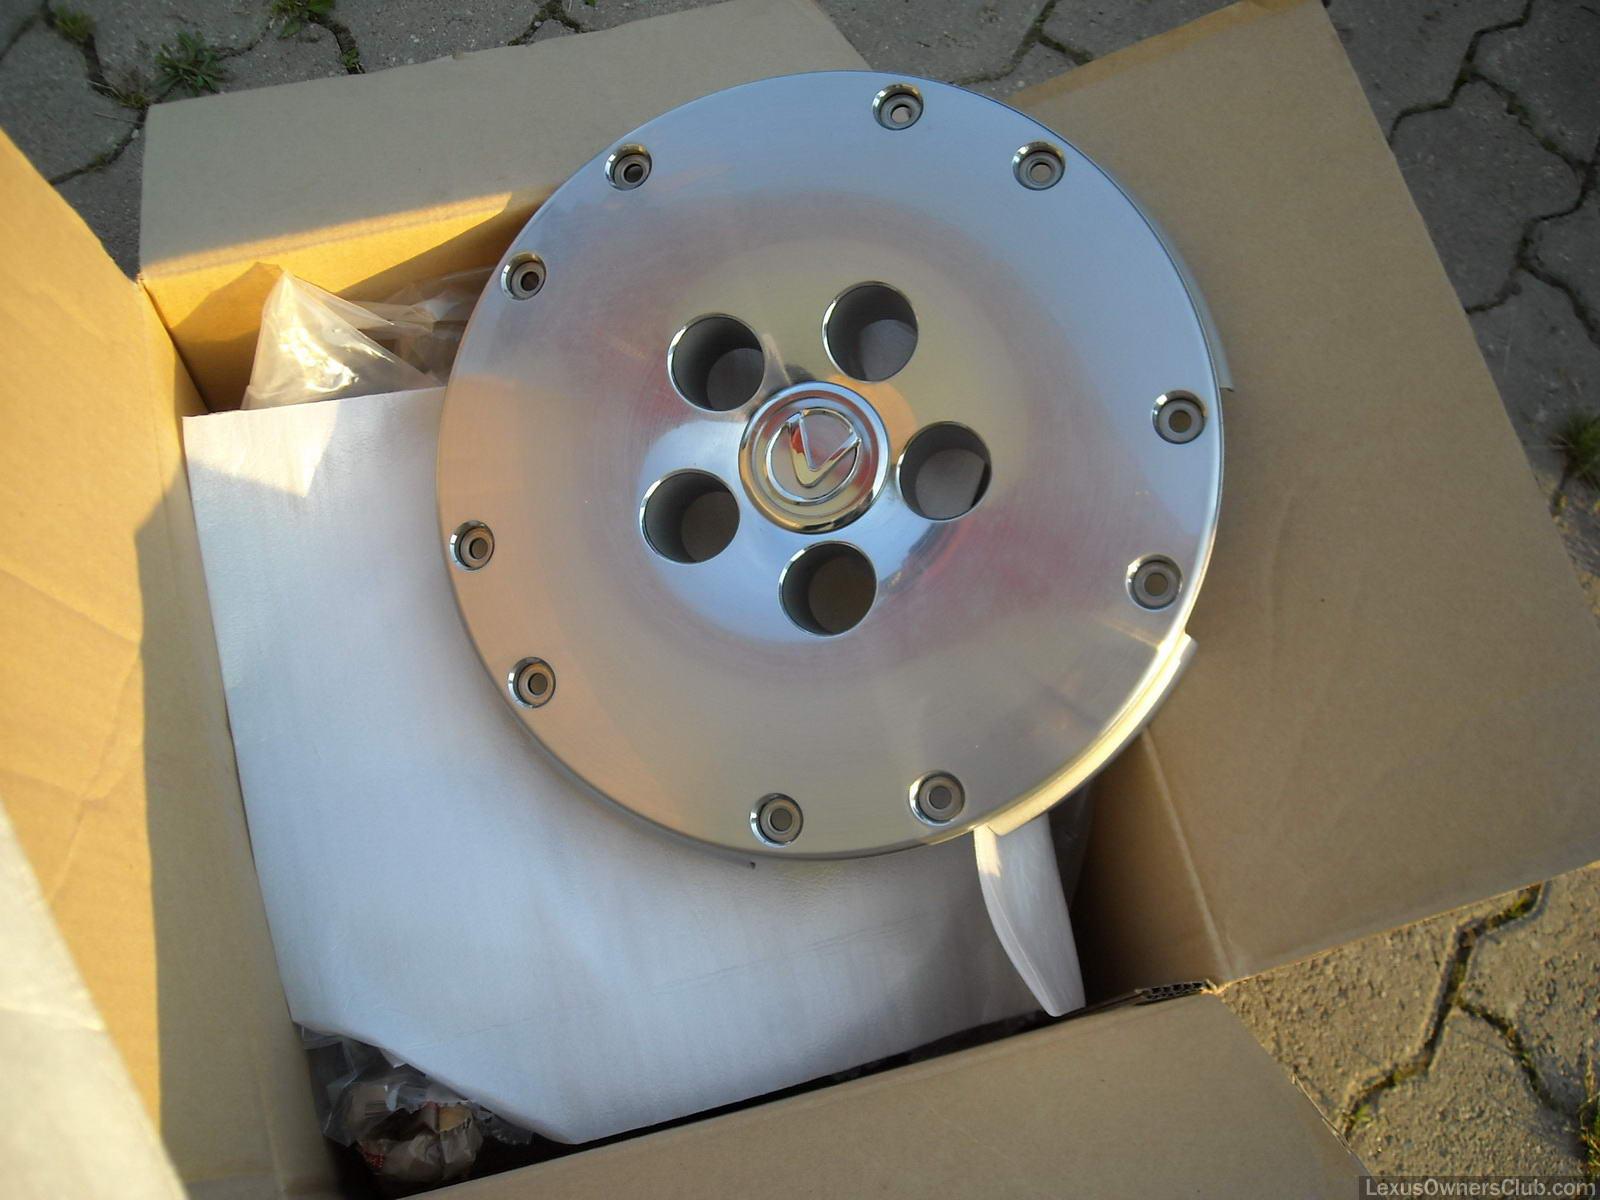 new SC wheelcovers :) ebay roolz :) thx